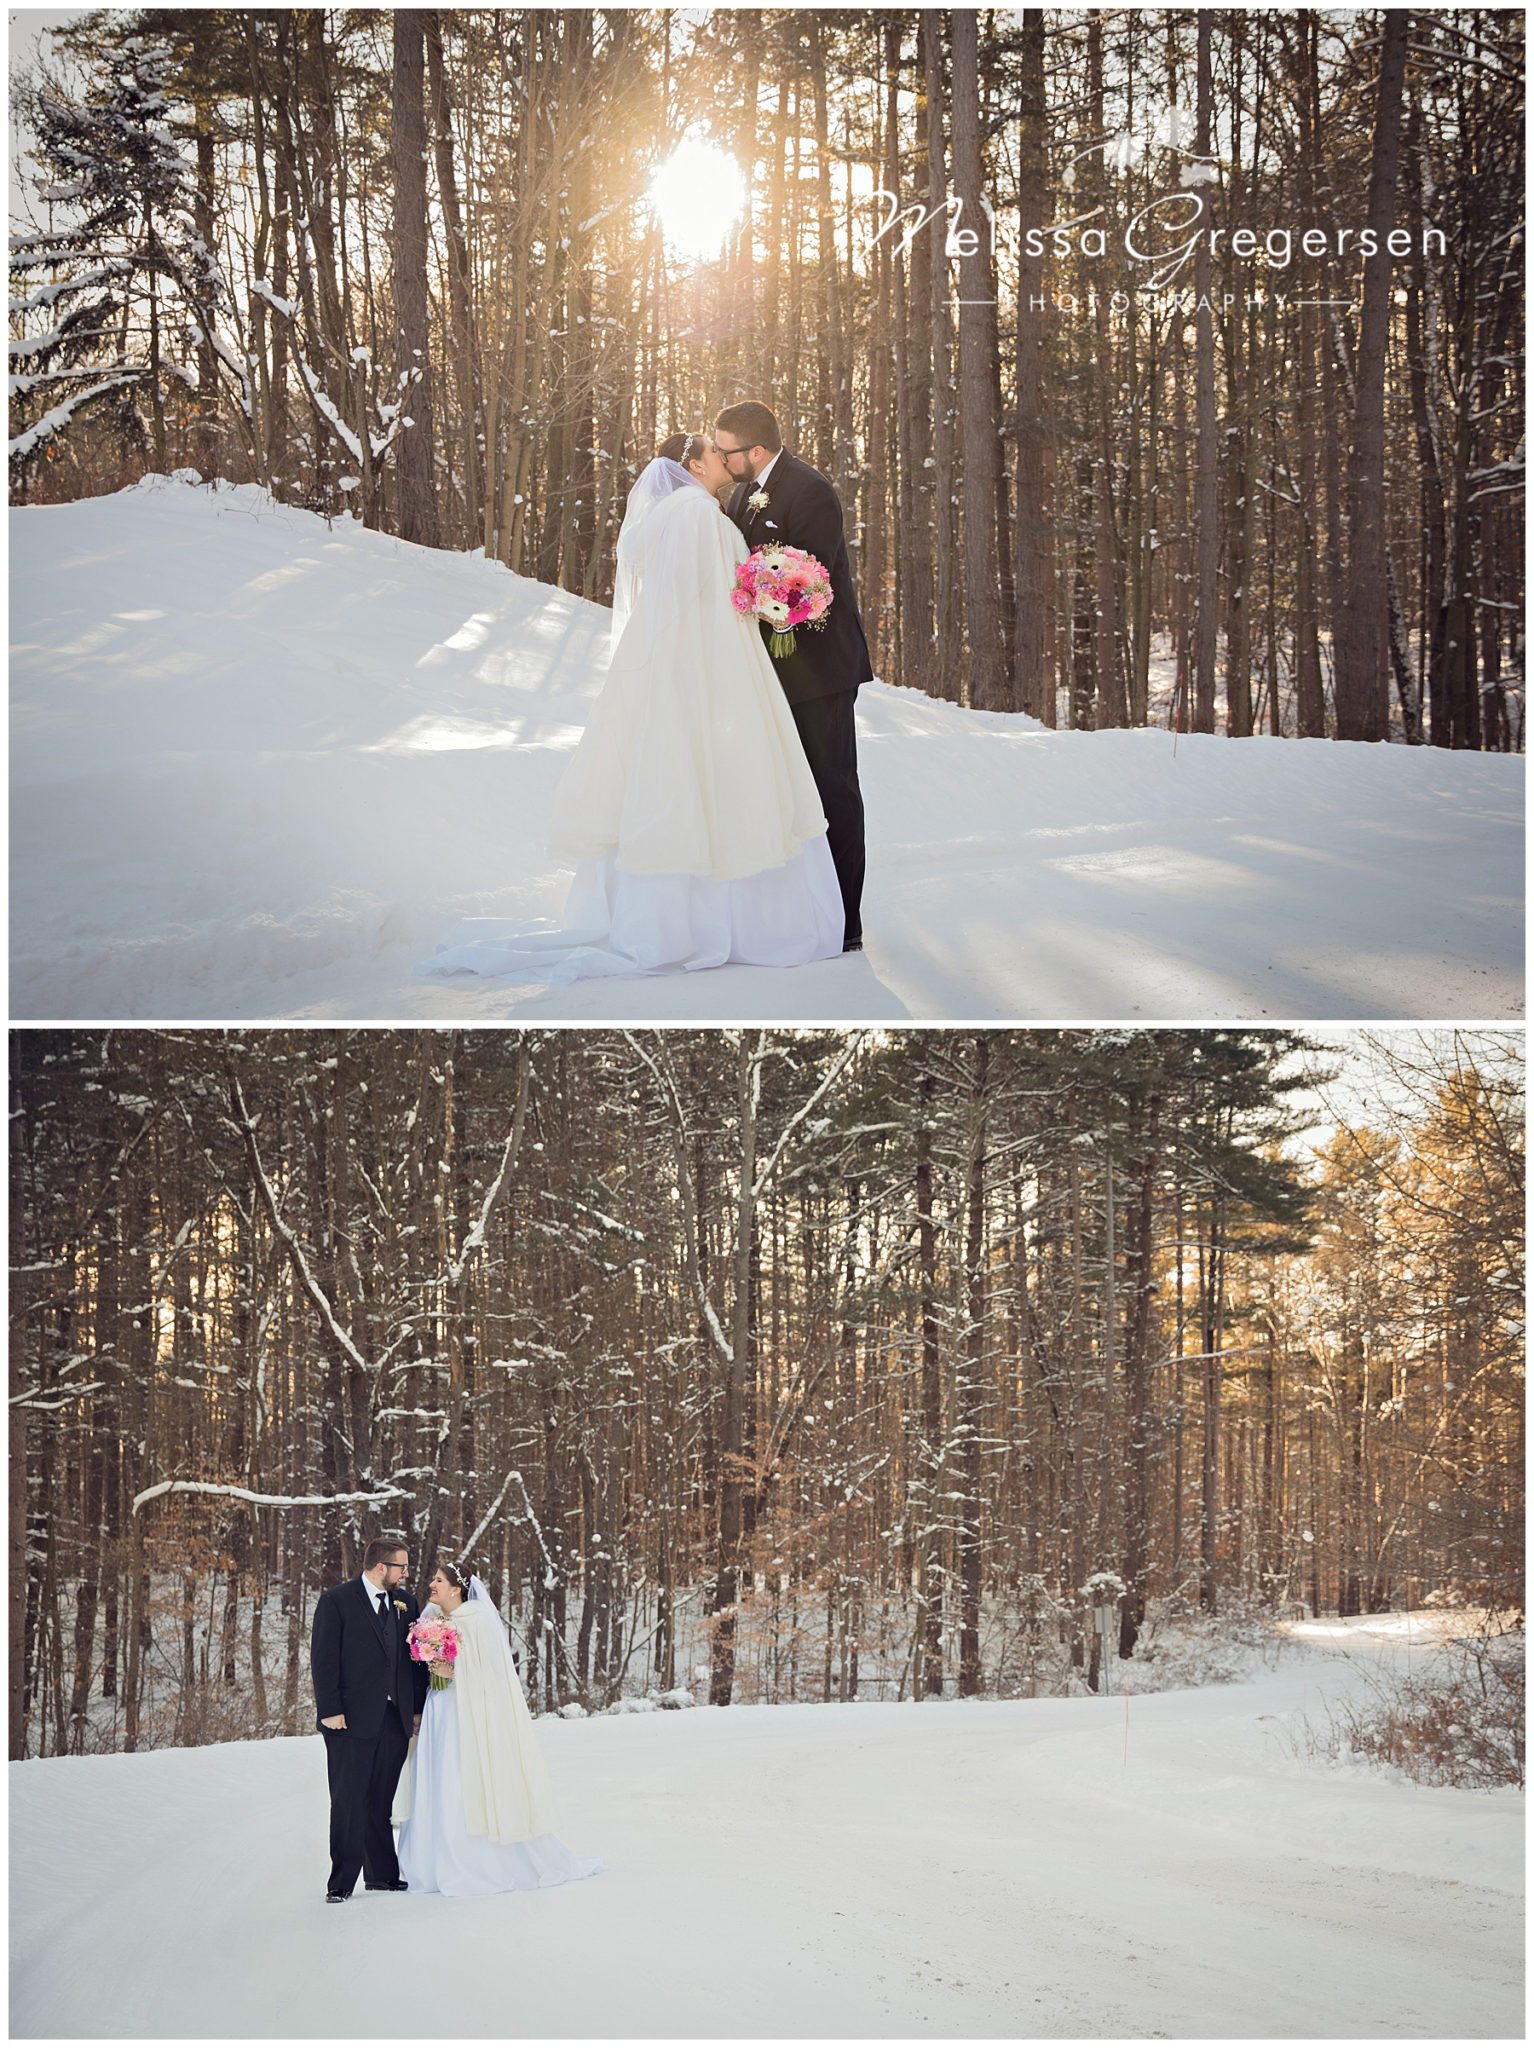 Megan & AJ :: Kalamazoo Michigan Wedding Photographer - Gregersen Photography